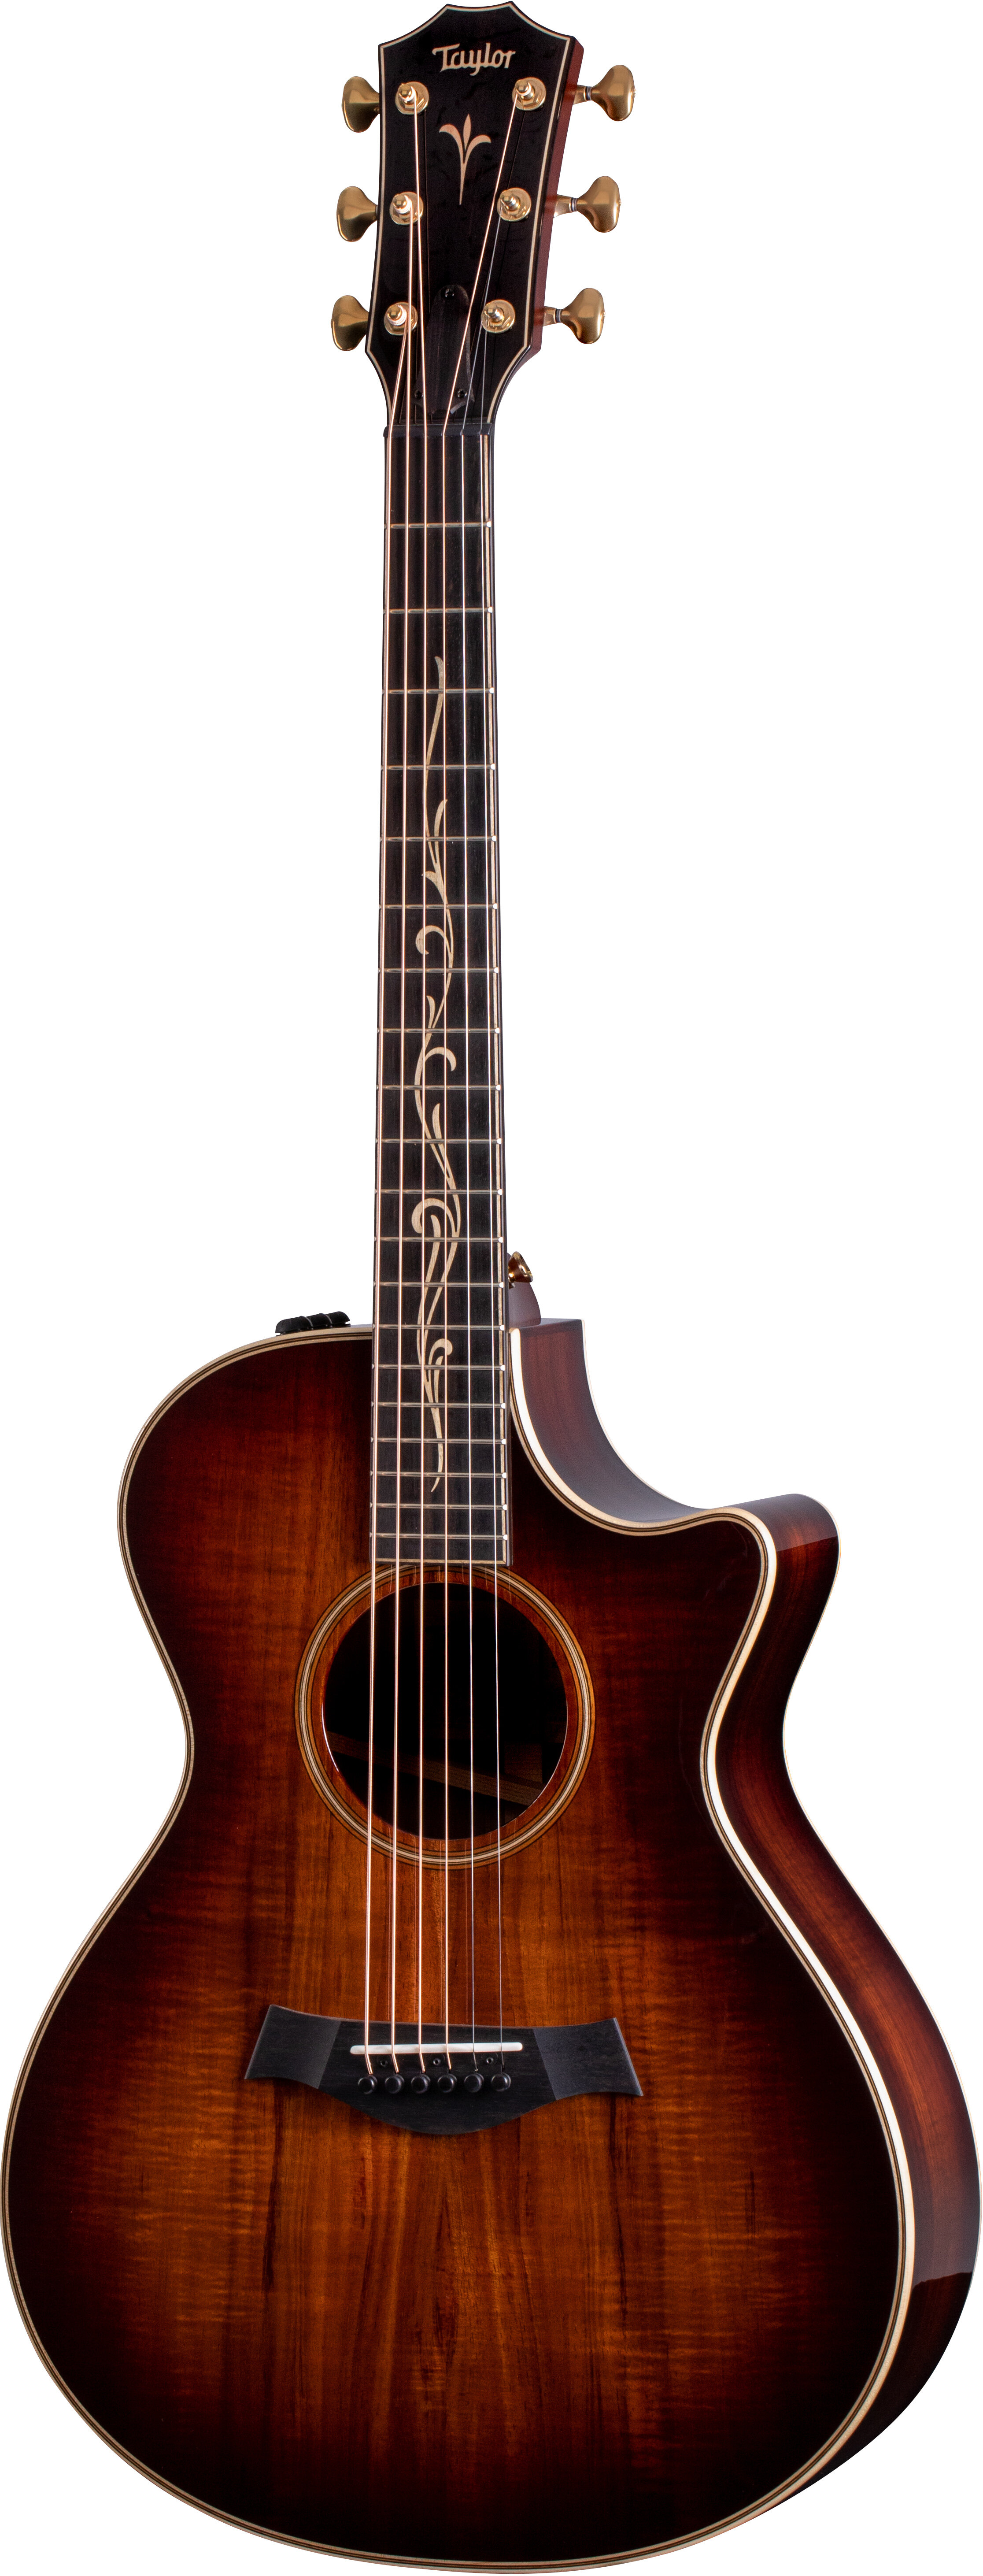 Taylor Guitars K22ce-22